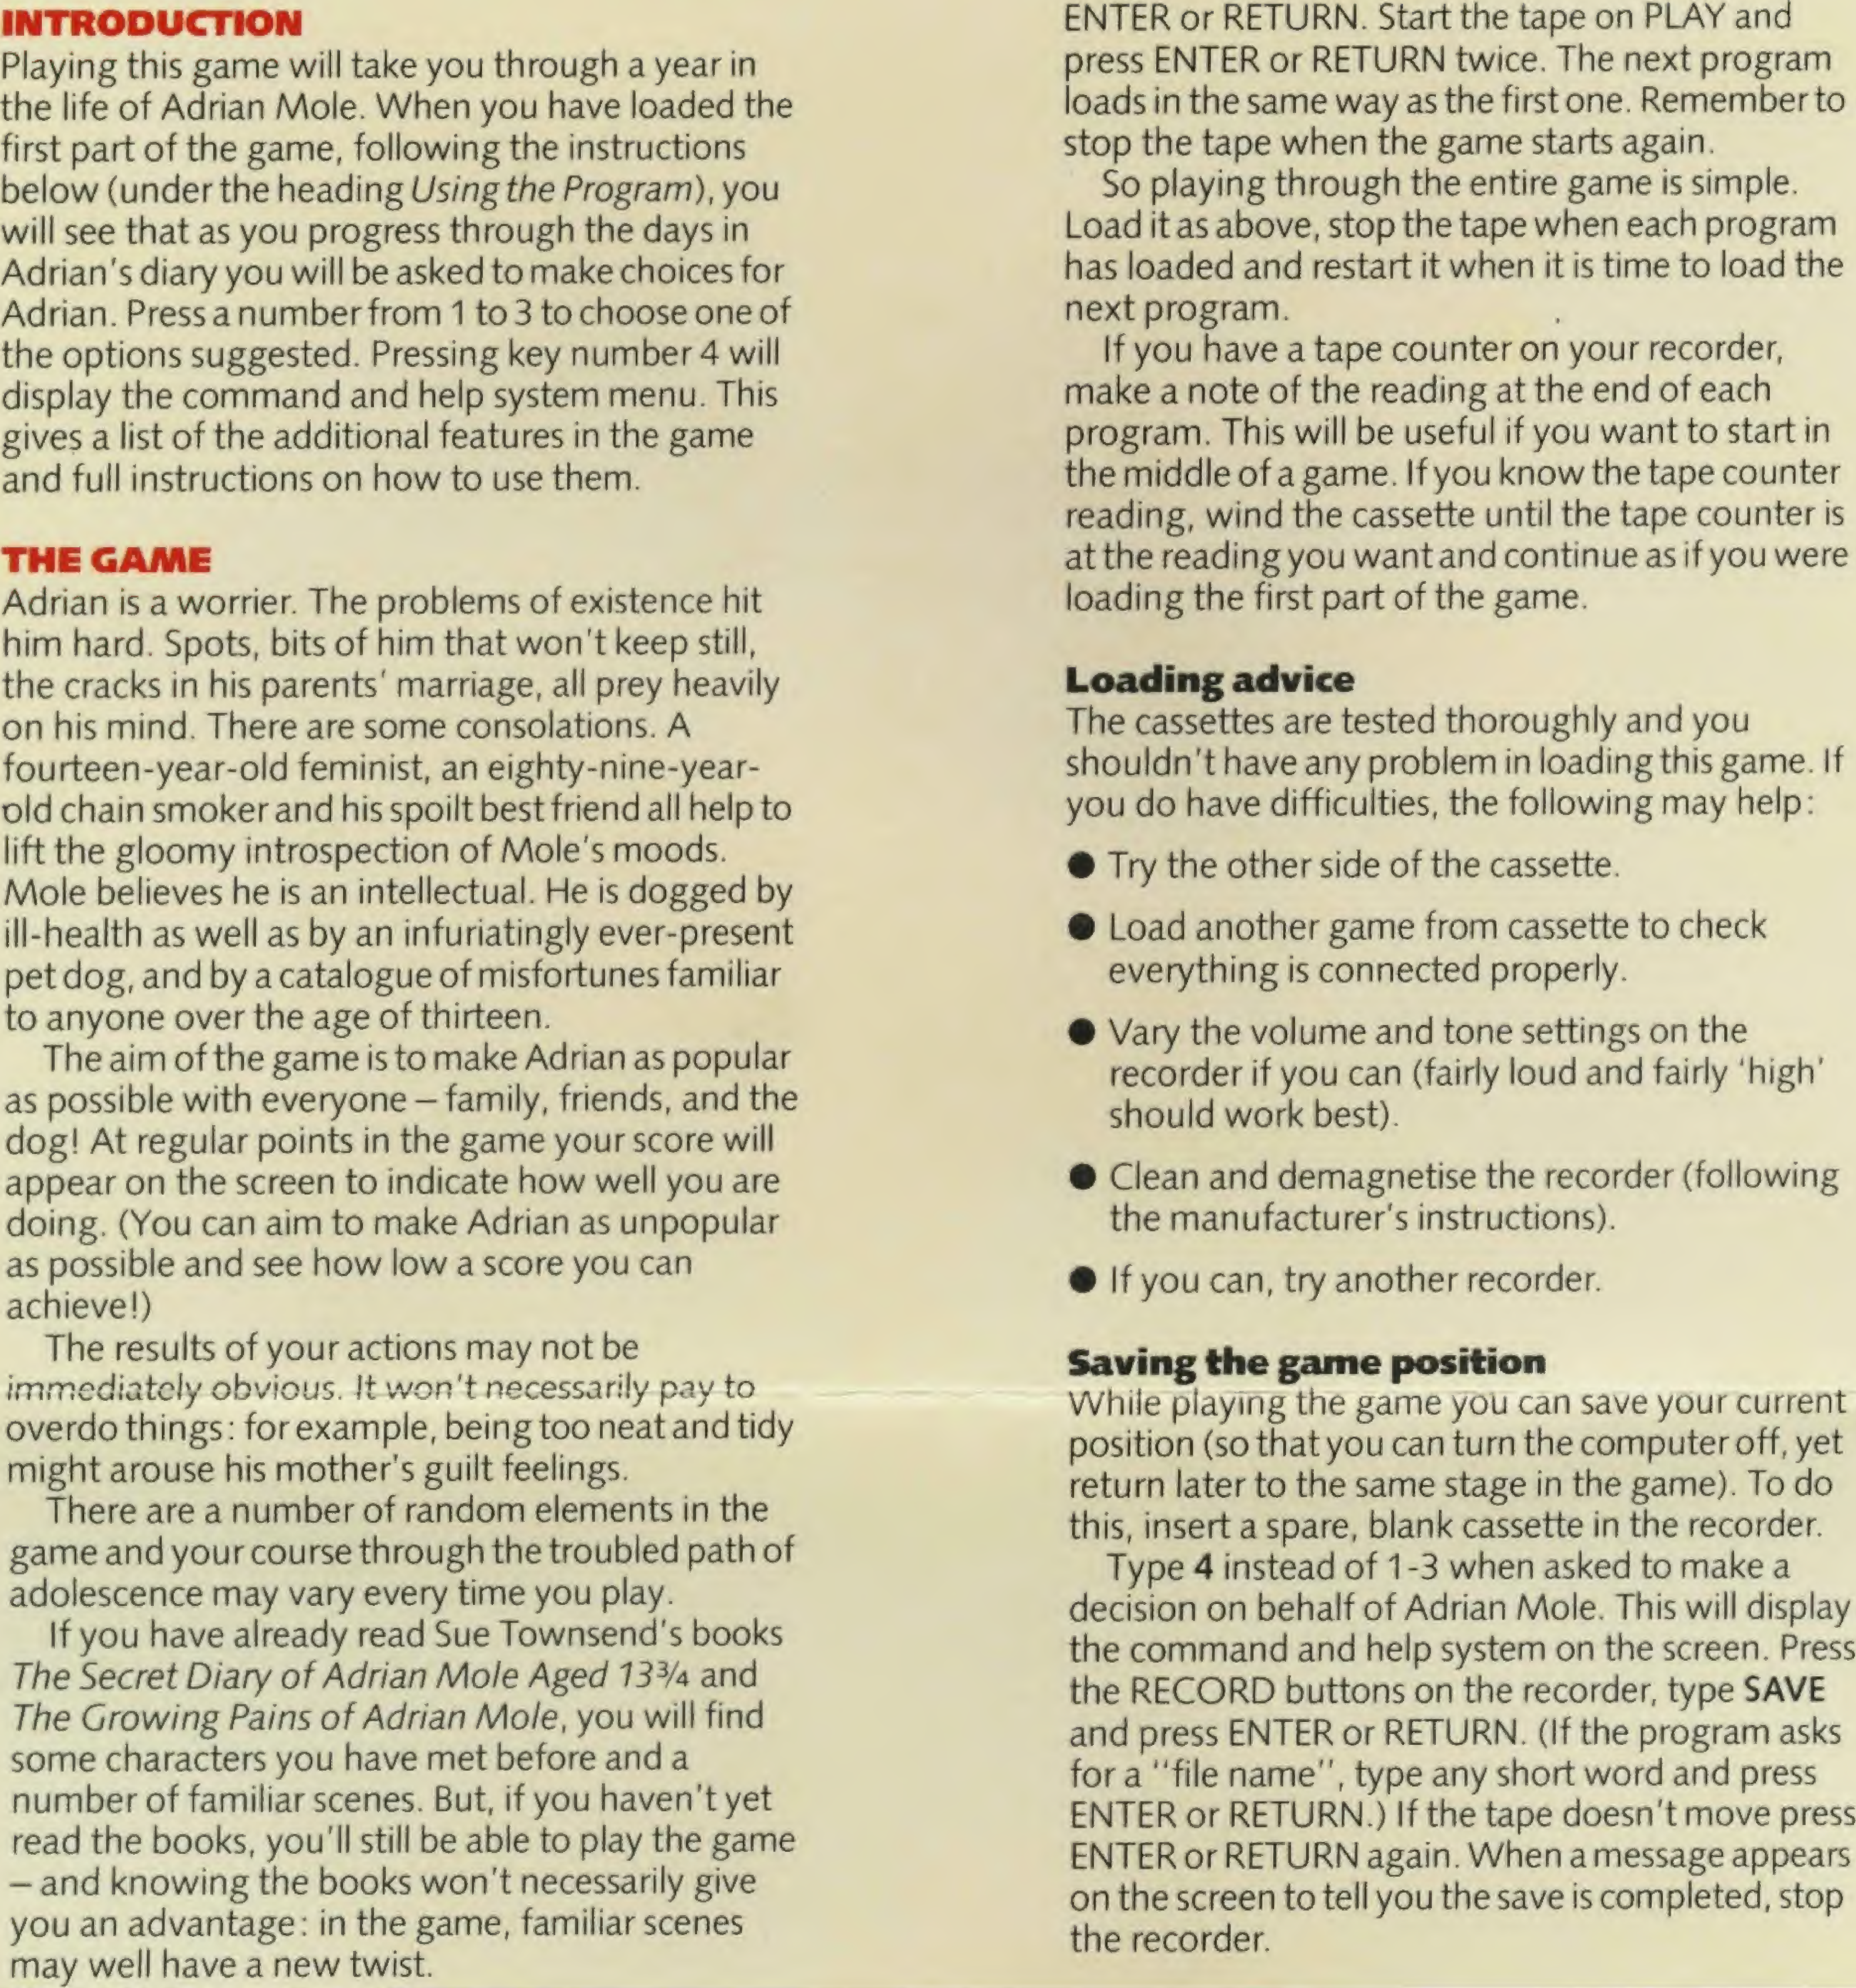 Page 2 of 4 - The Secret Diary Of Adrian Mole Manual (GB) Adrianmolediarykit-manual Text